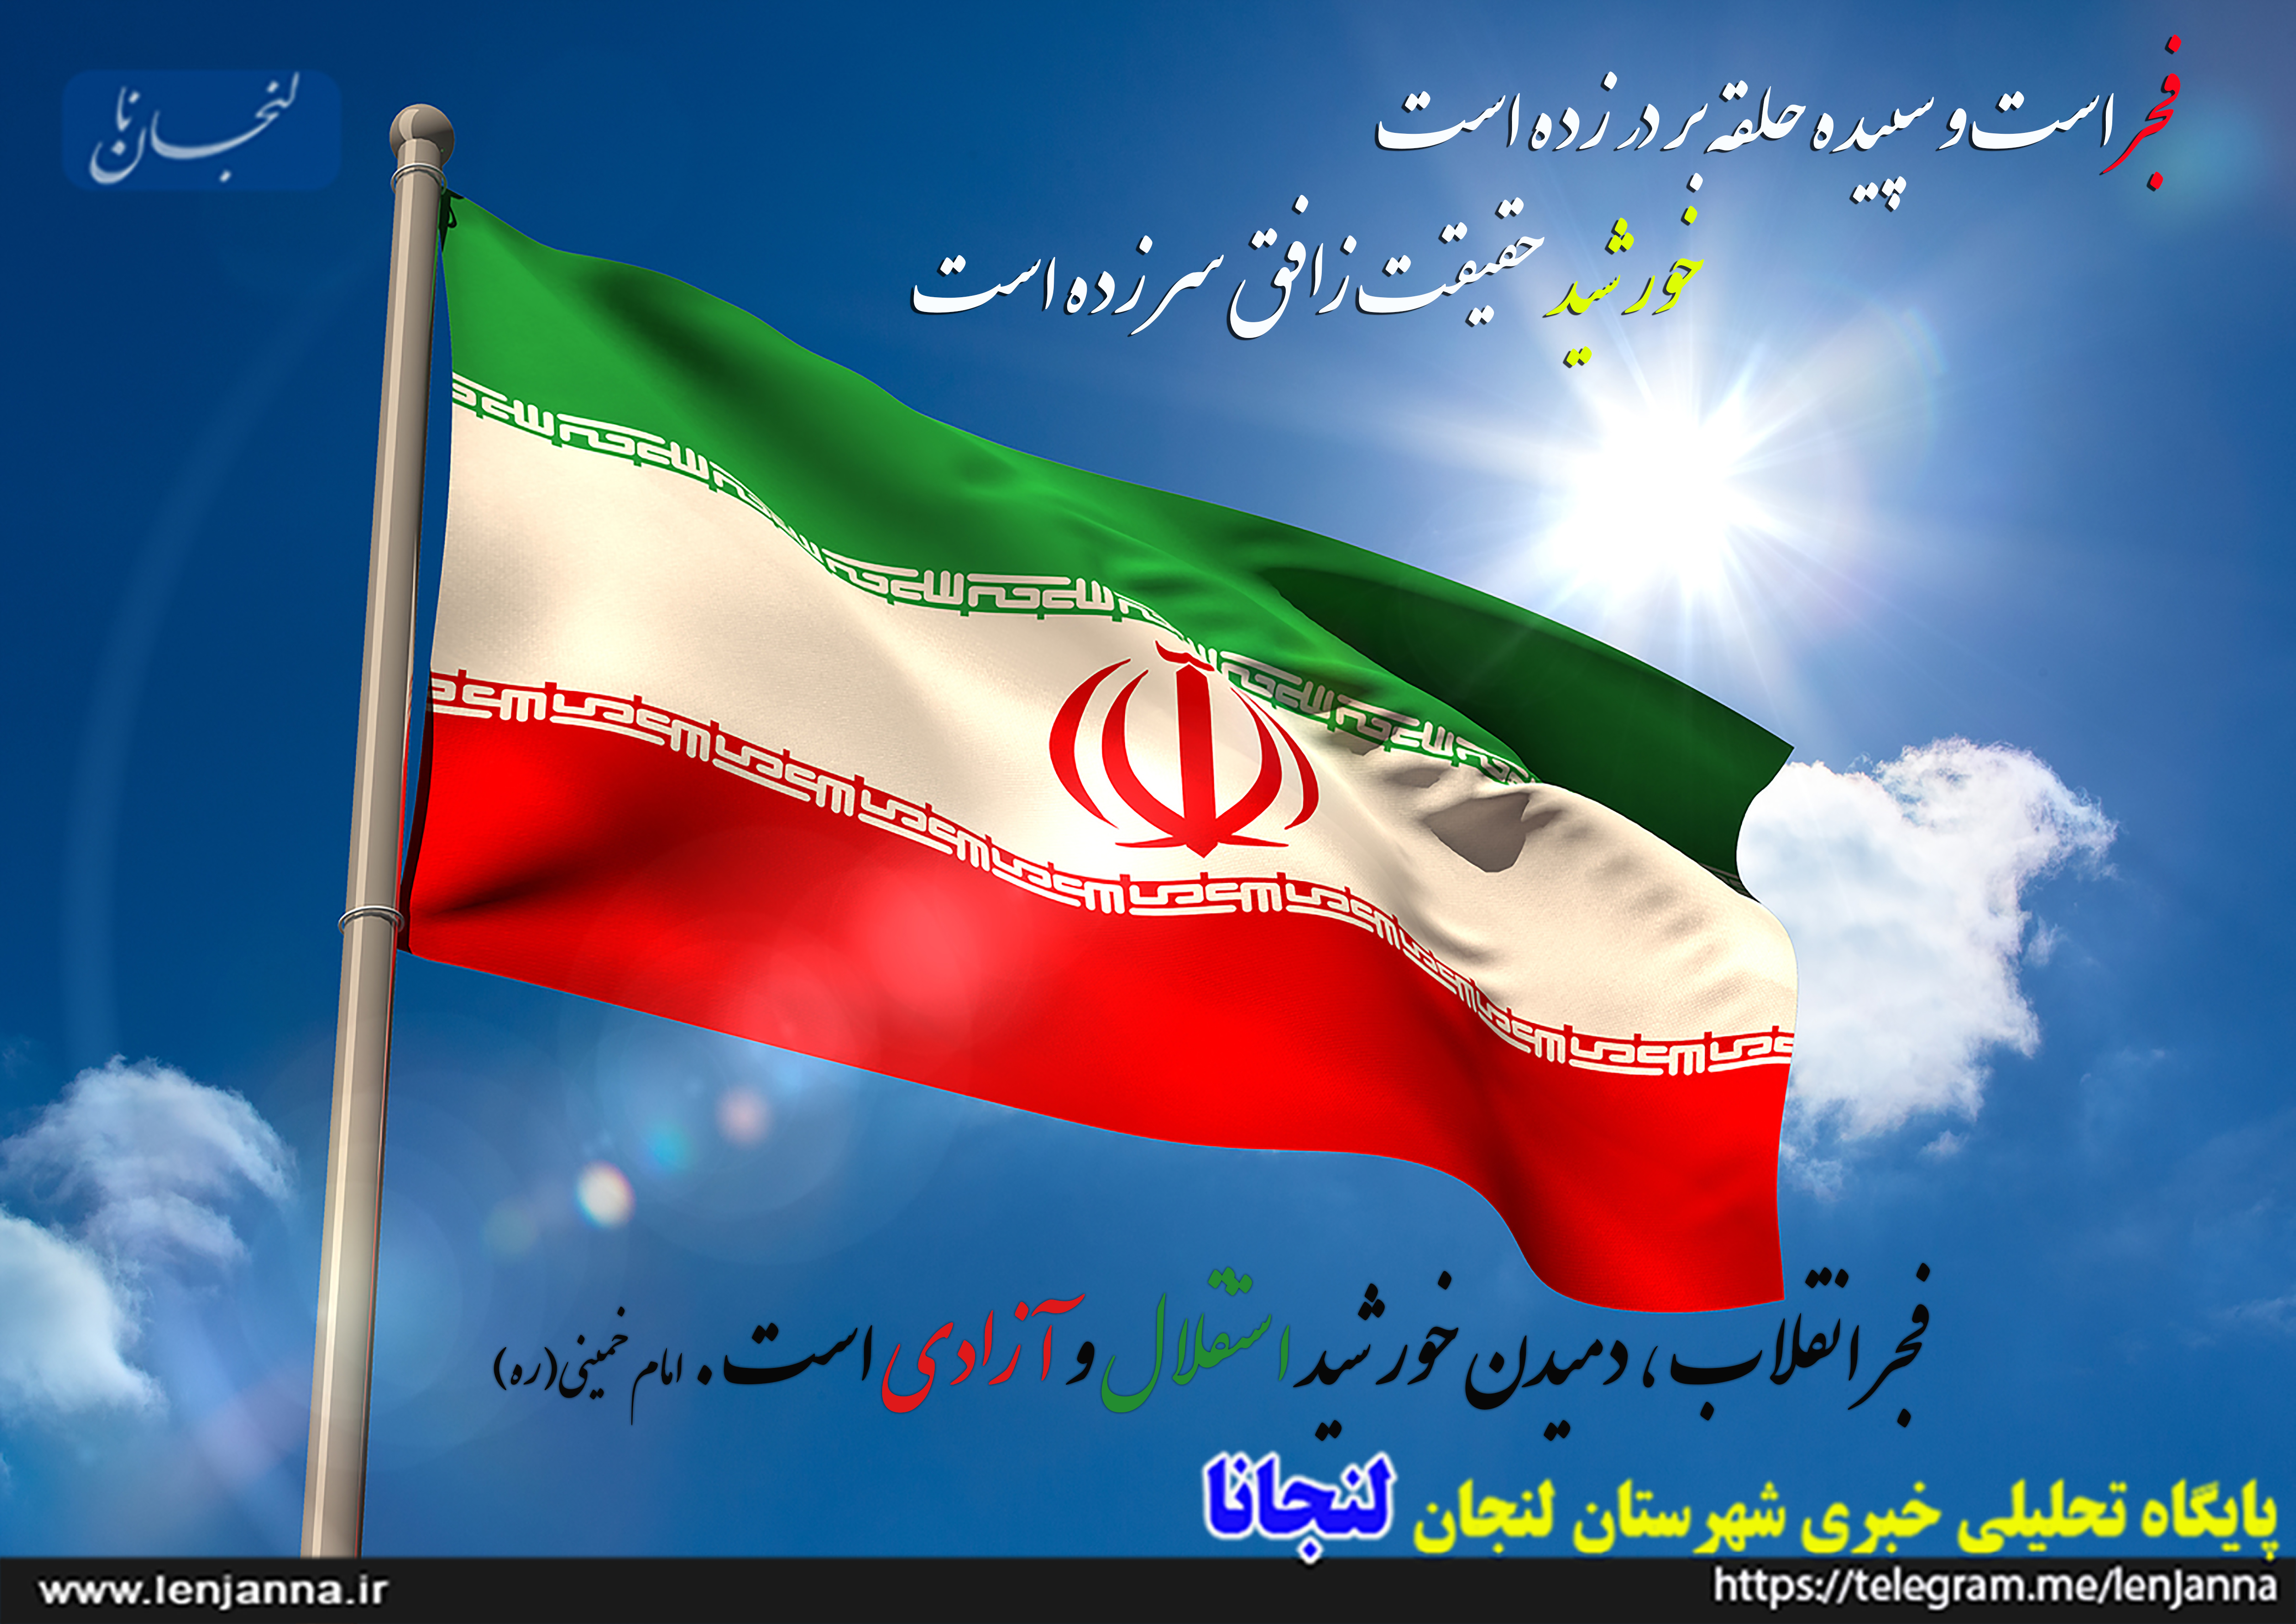 Iran national flag on blue sky background